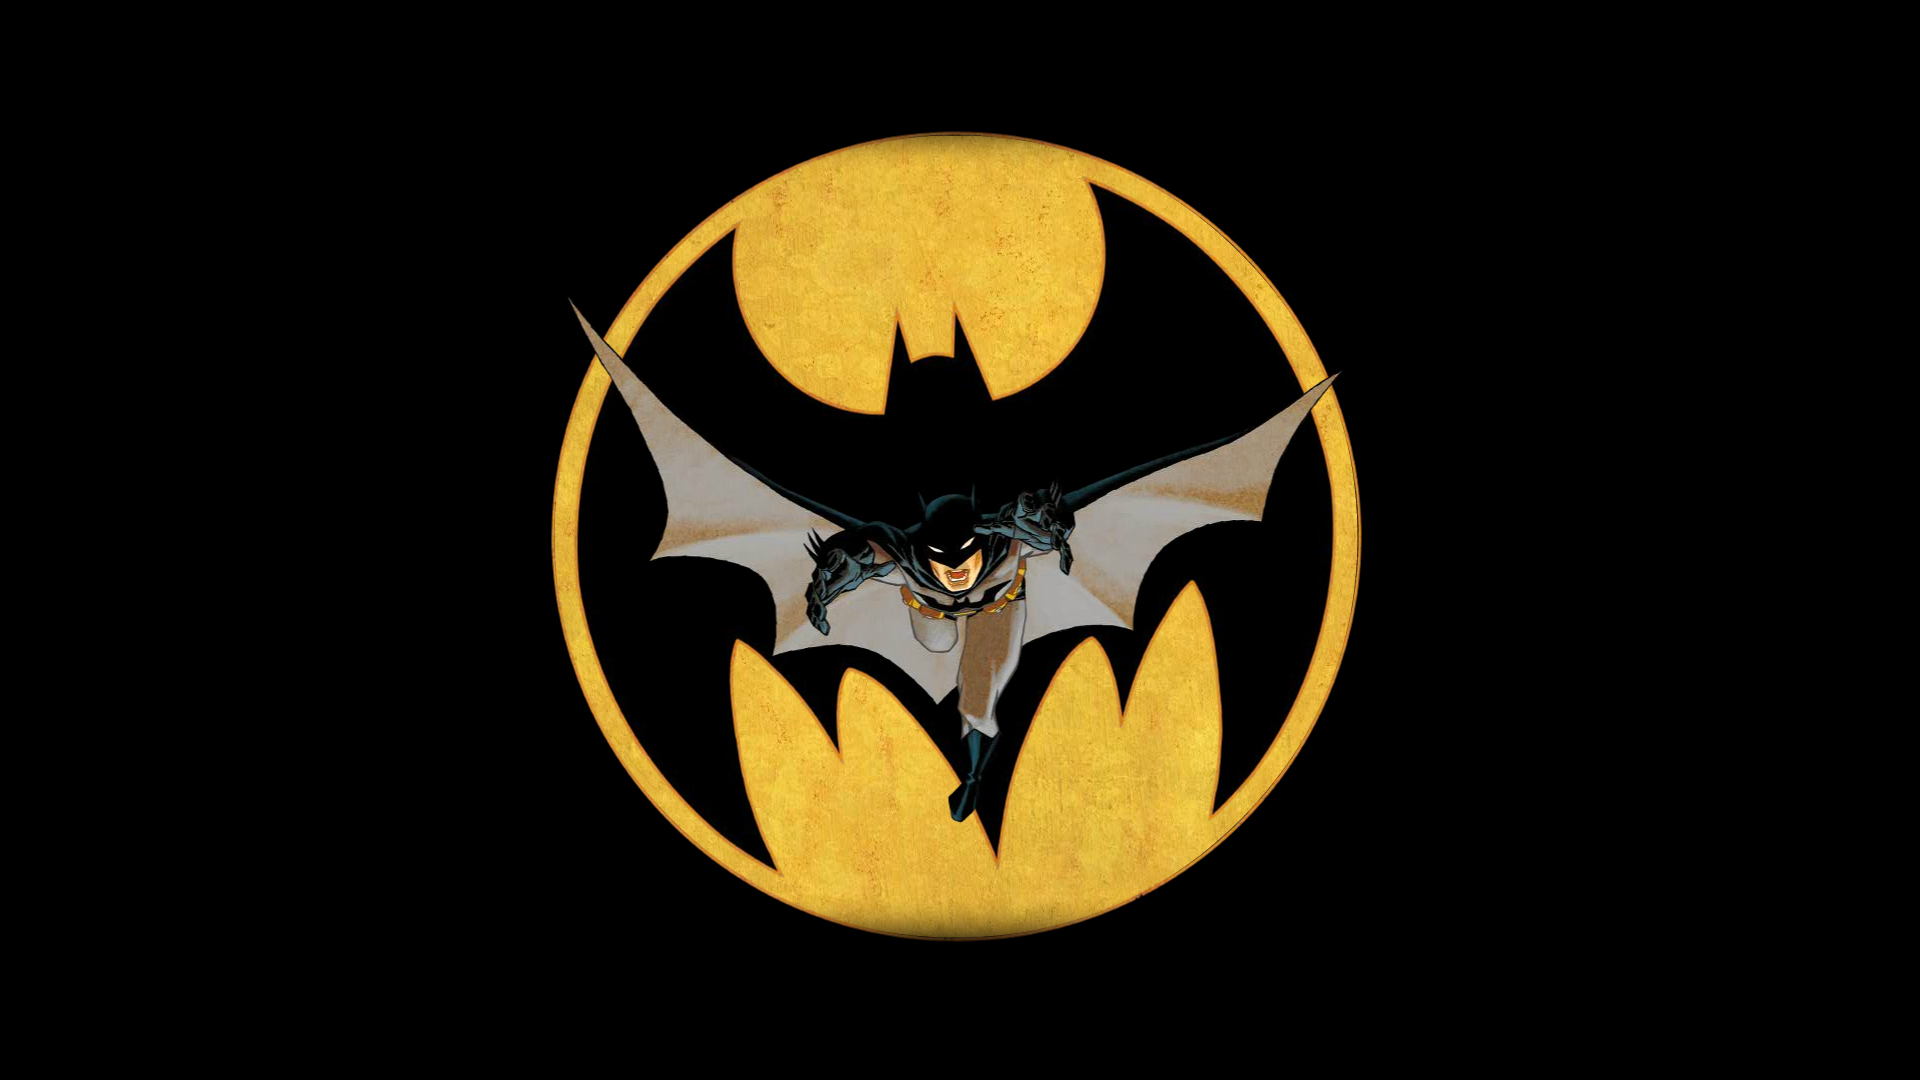 Movie Batman: Year One HD Wallpaper | Background Image